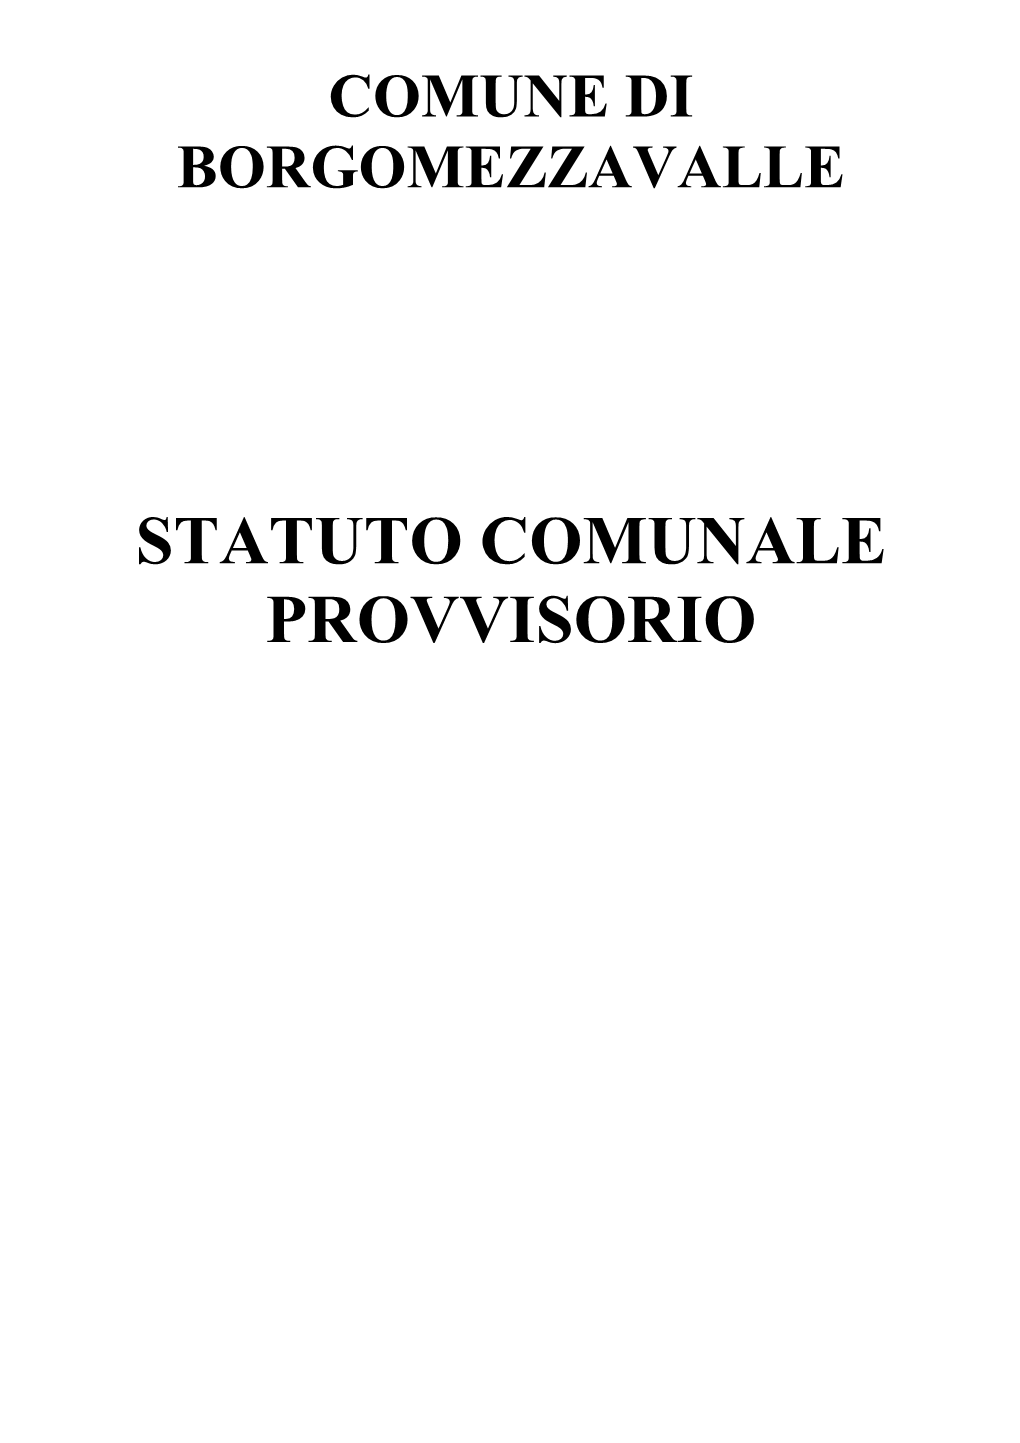 25-15 Statuto Borgomezzavalle